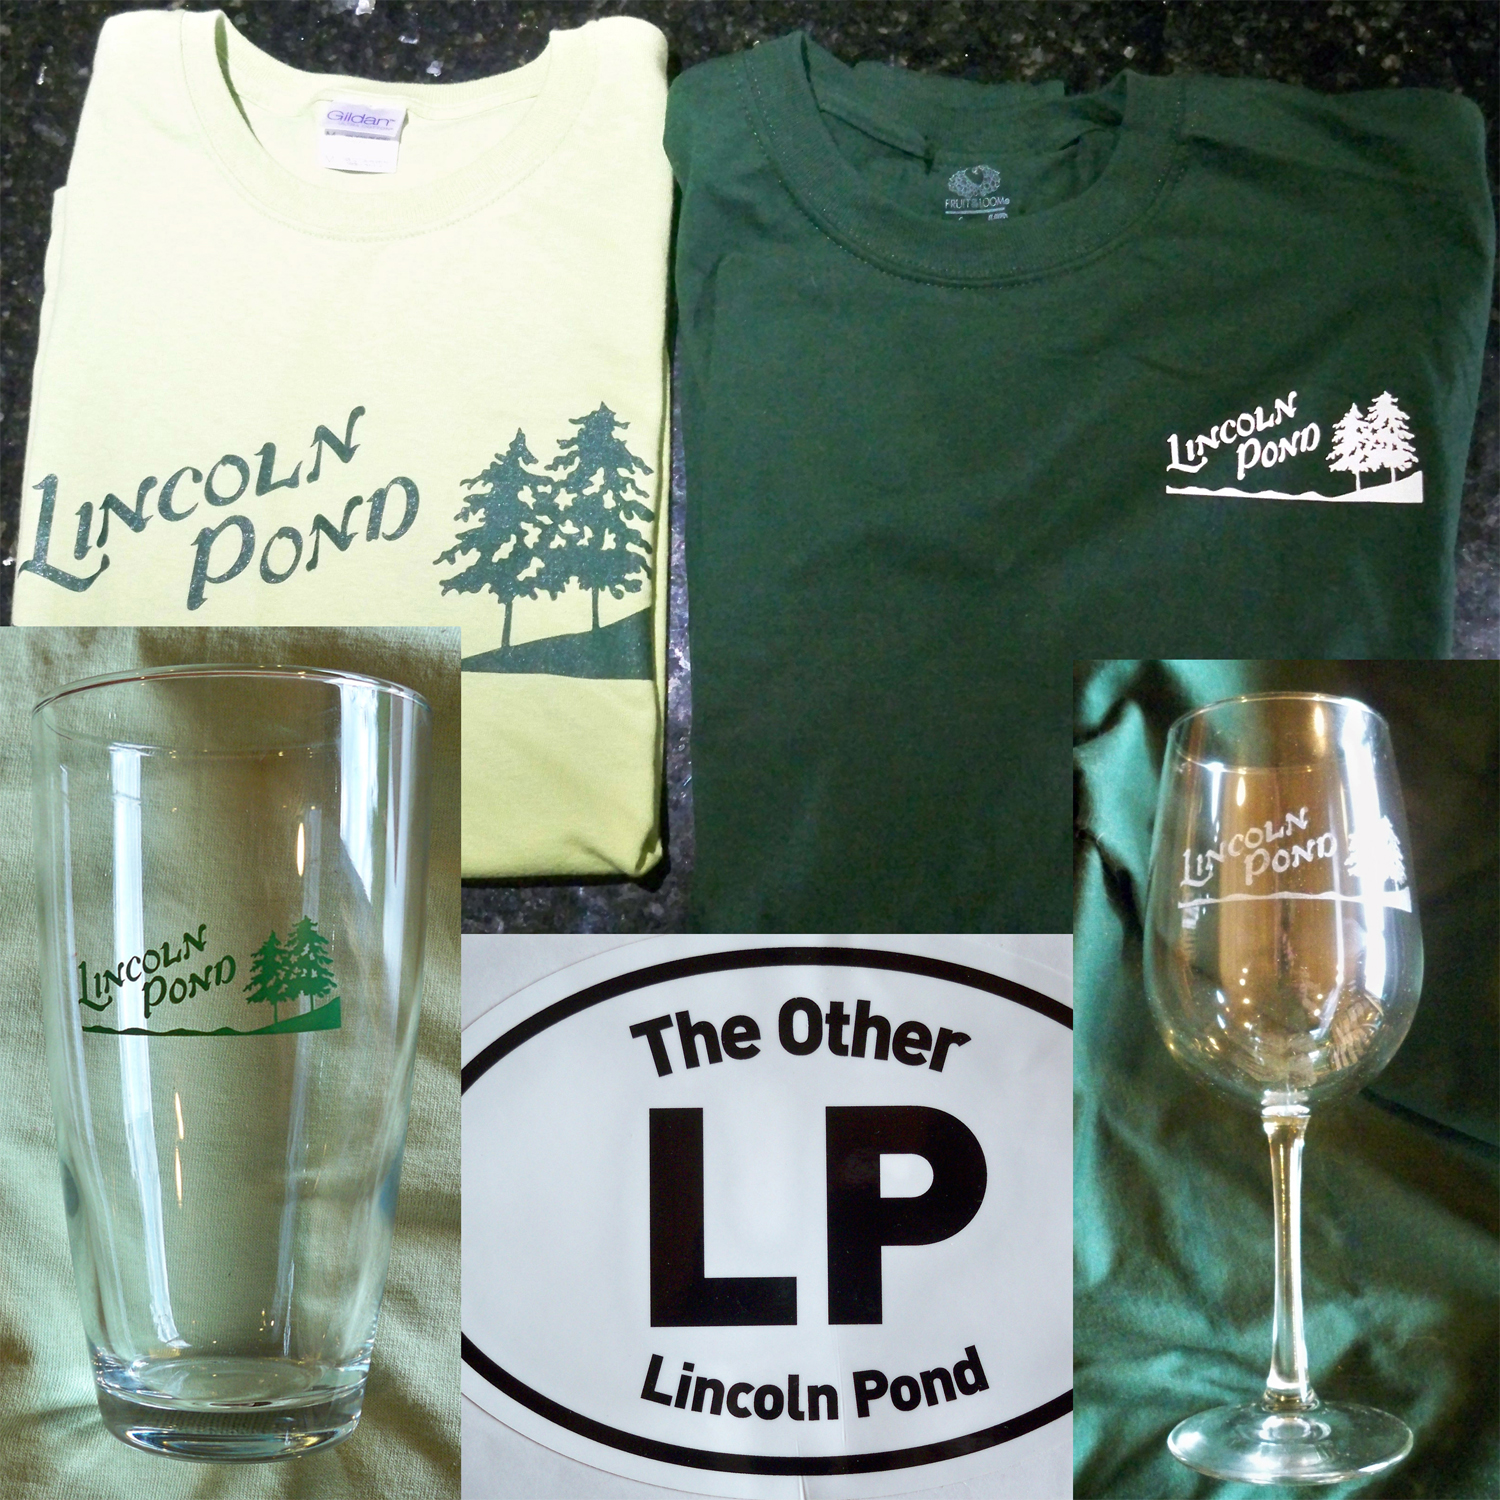 lincoln pond association logo items